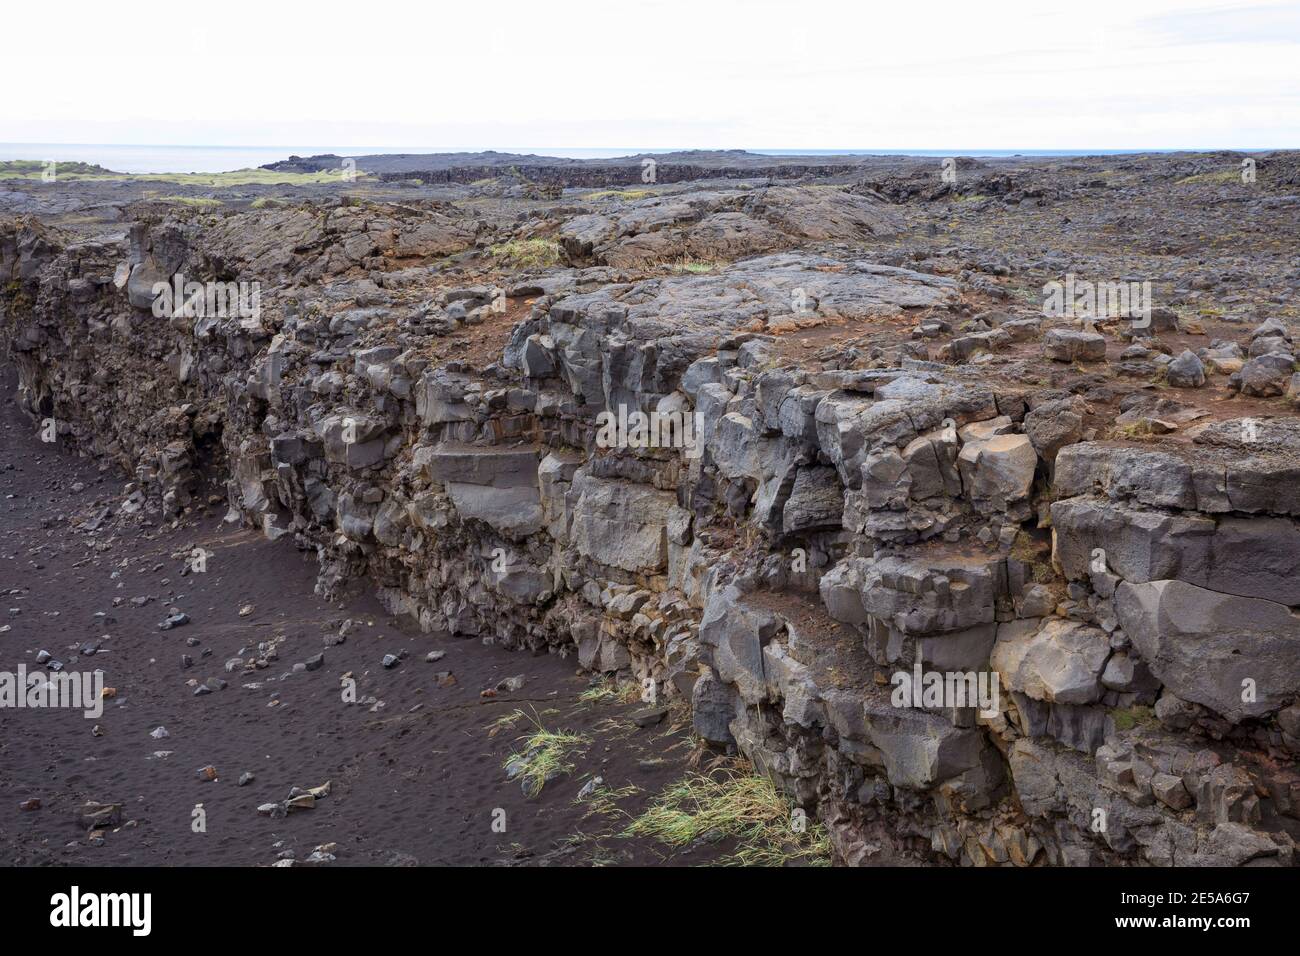 Valle Midlinda, Bru milli Heimsalfa, valle rift tra due piastre tettoniche, Islanda Foto Stock